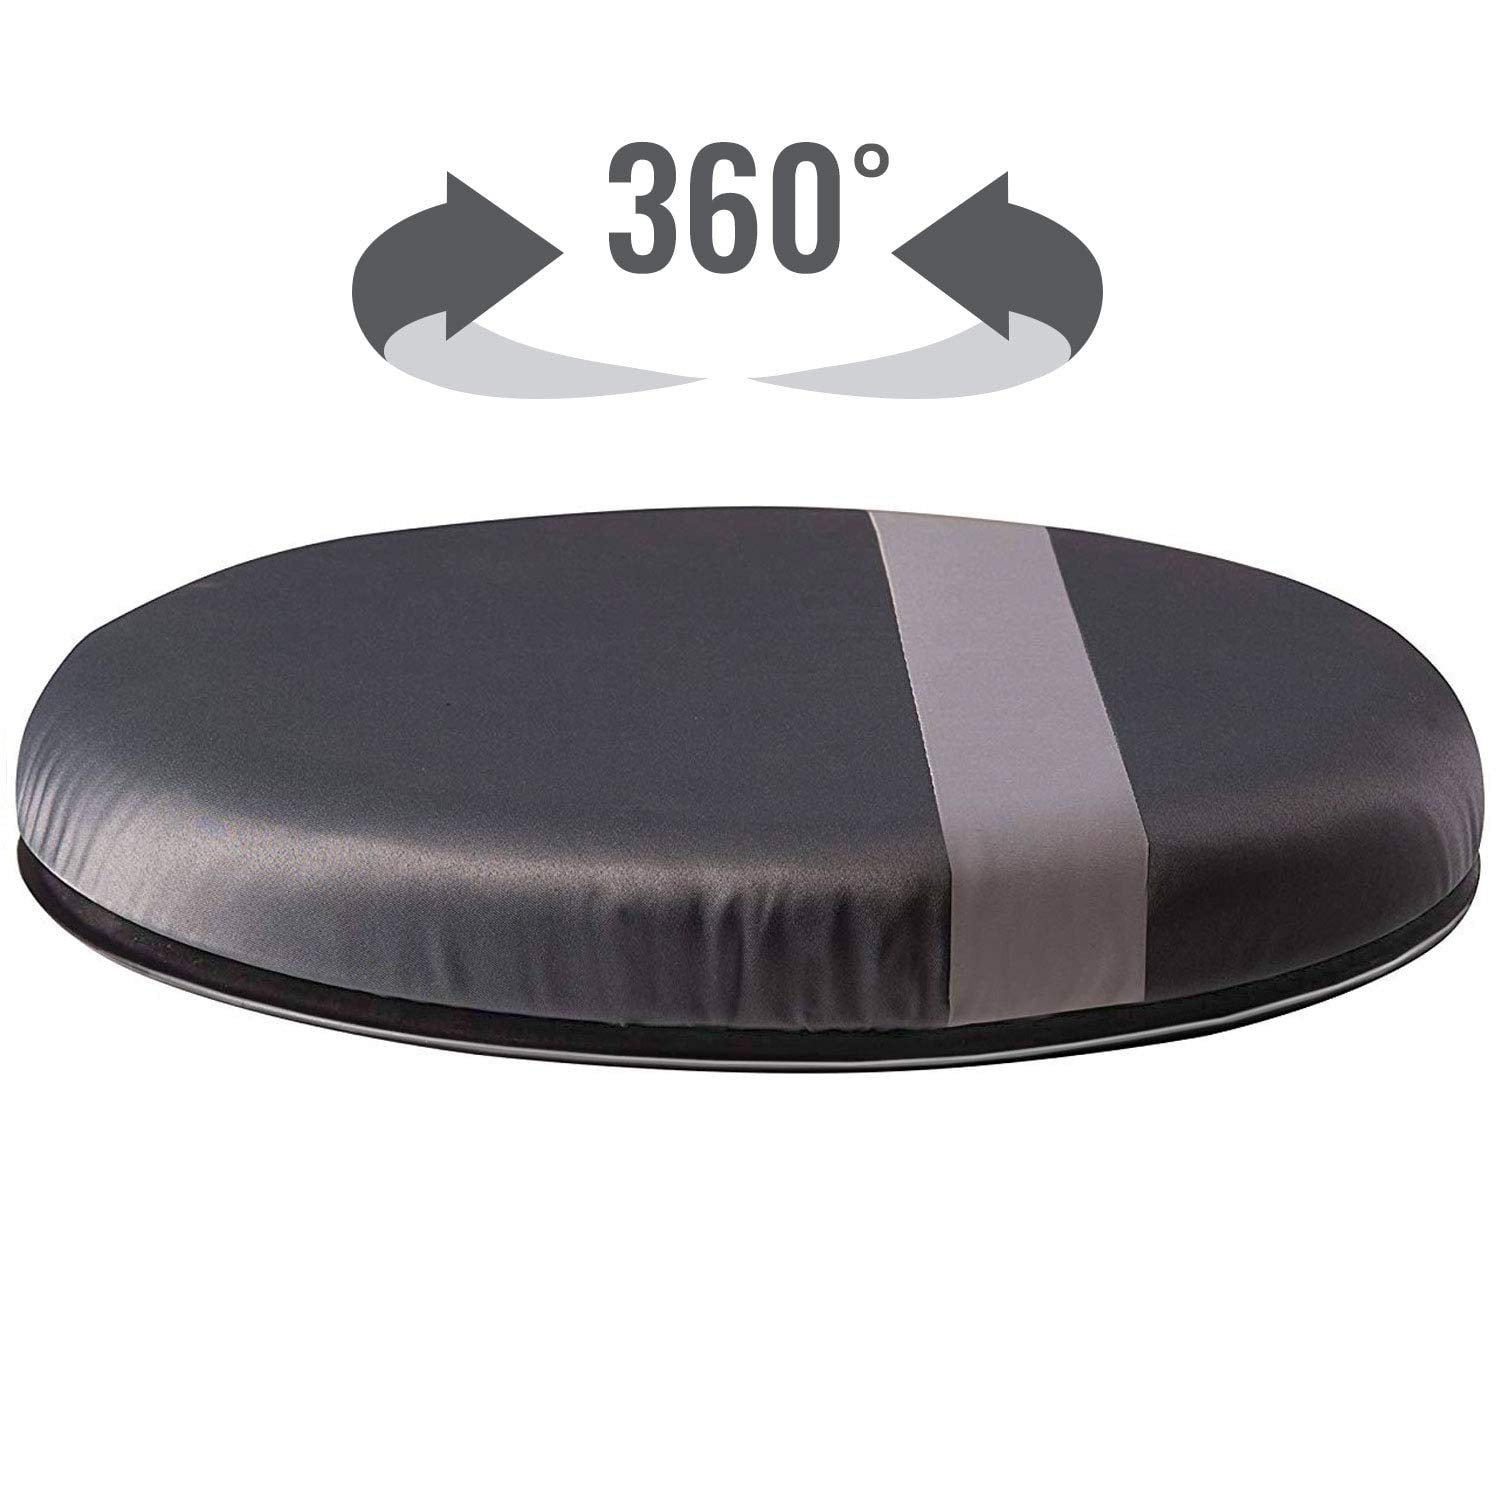 360° Rotating Cushion Car Swivel Seat Cushion Transfer Disc Fit